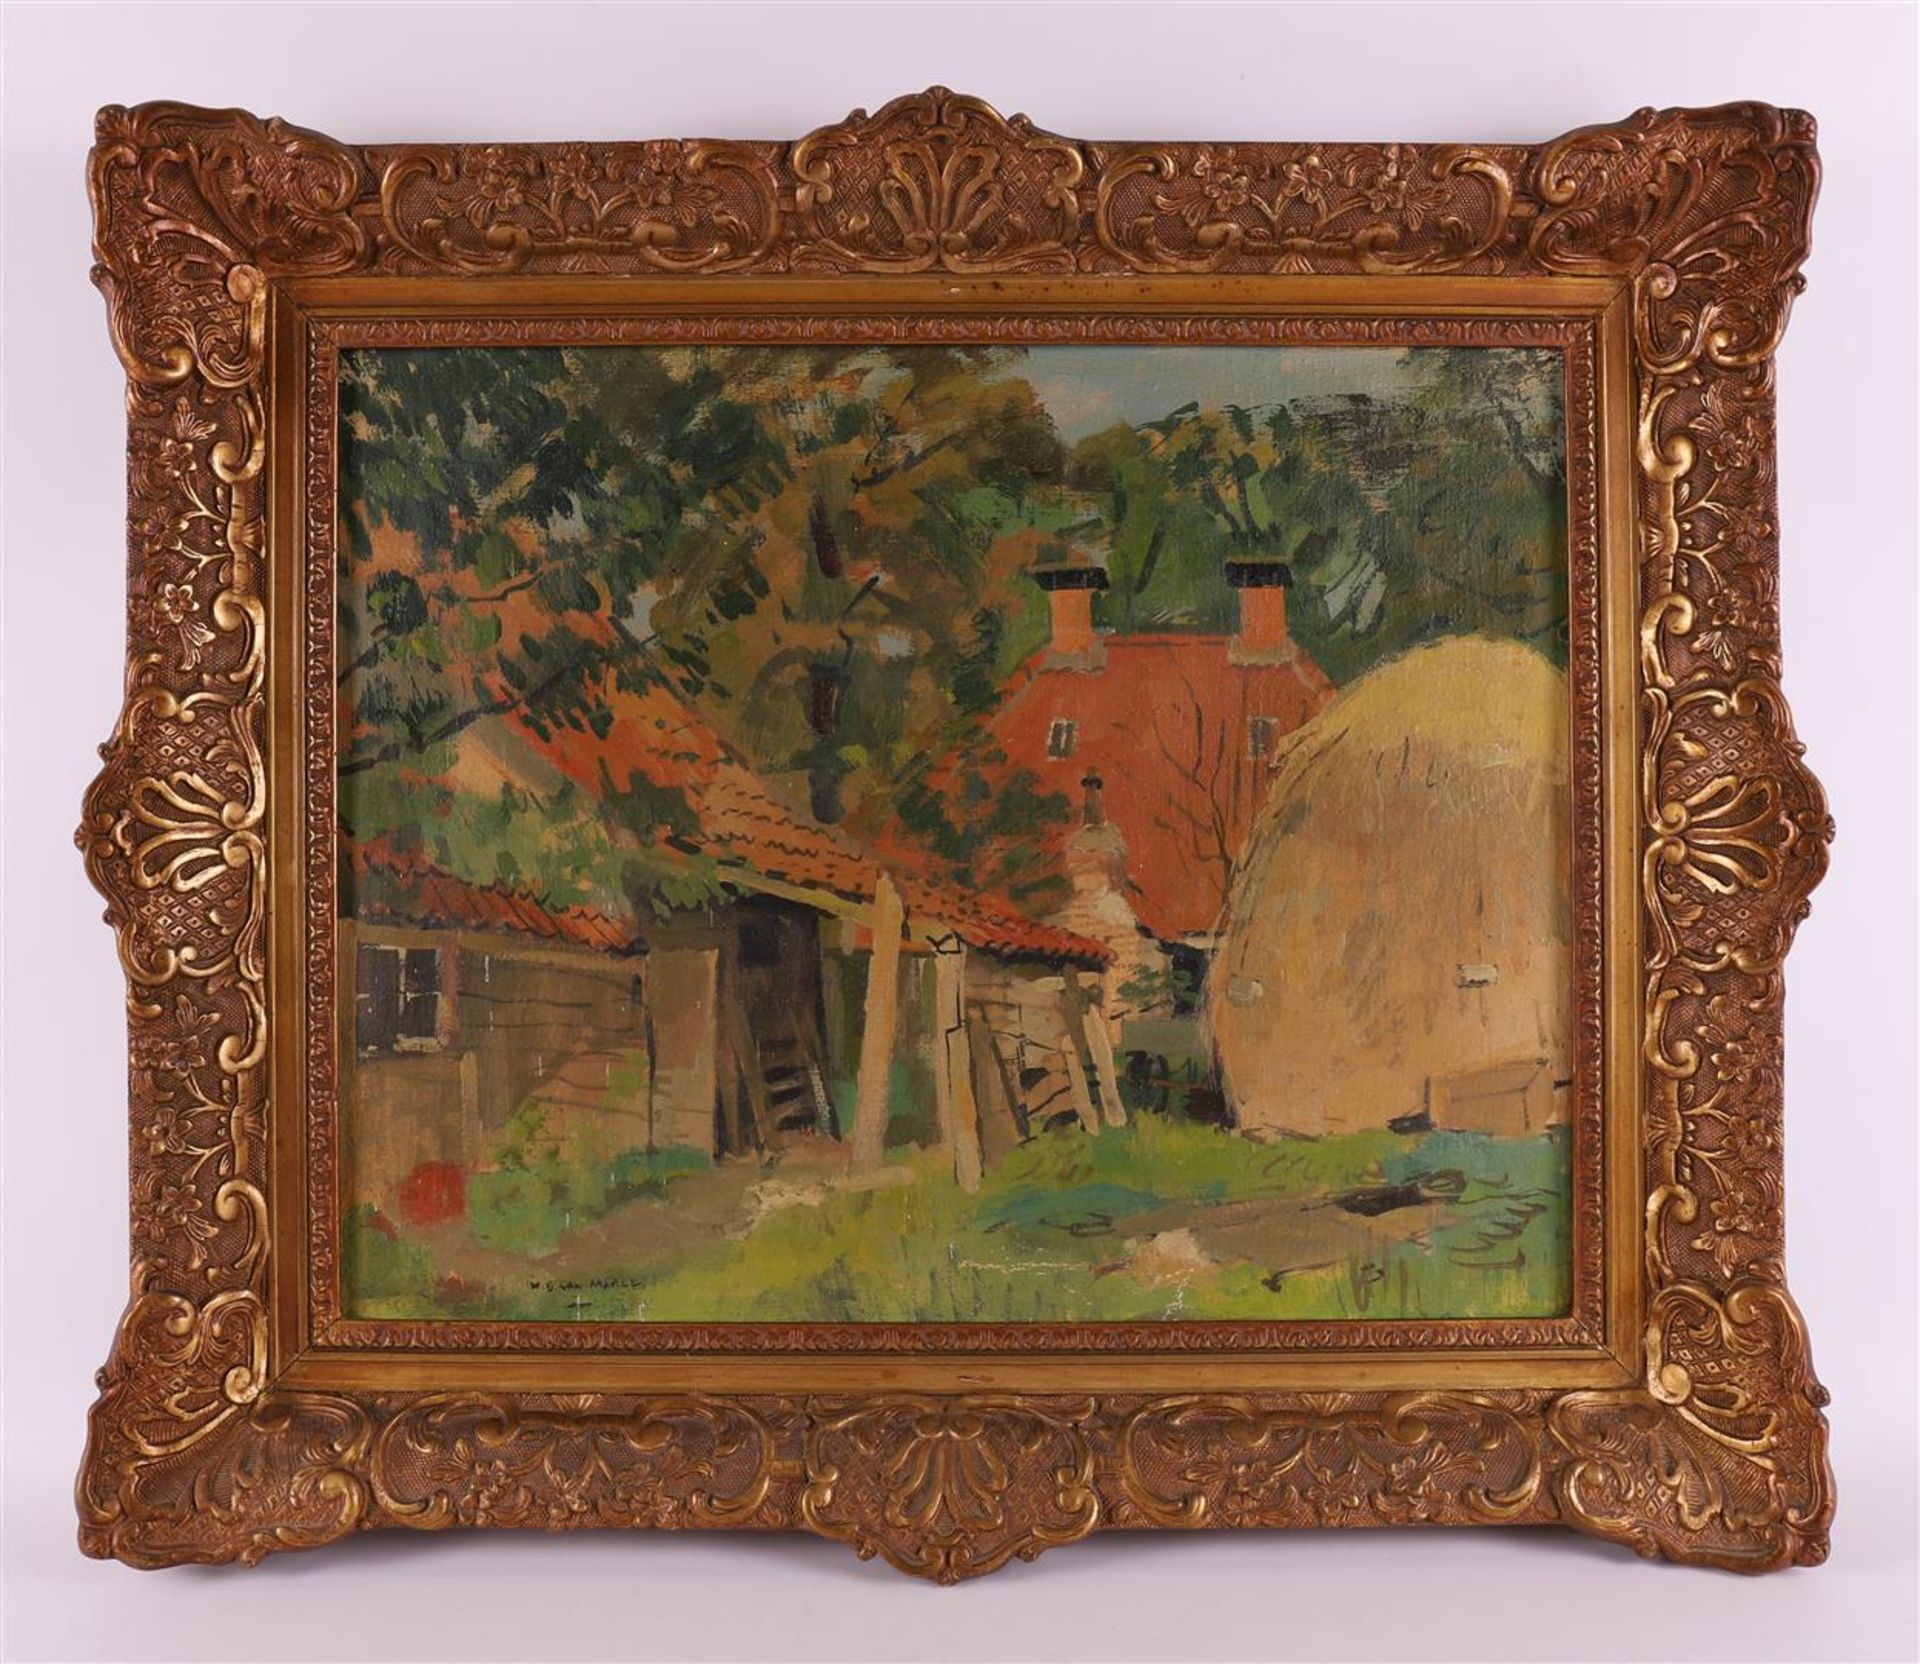 Marle van, W.B (Groningen 1909-1988) 'Farmer's housing with haystack',